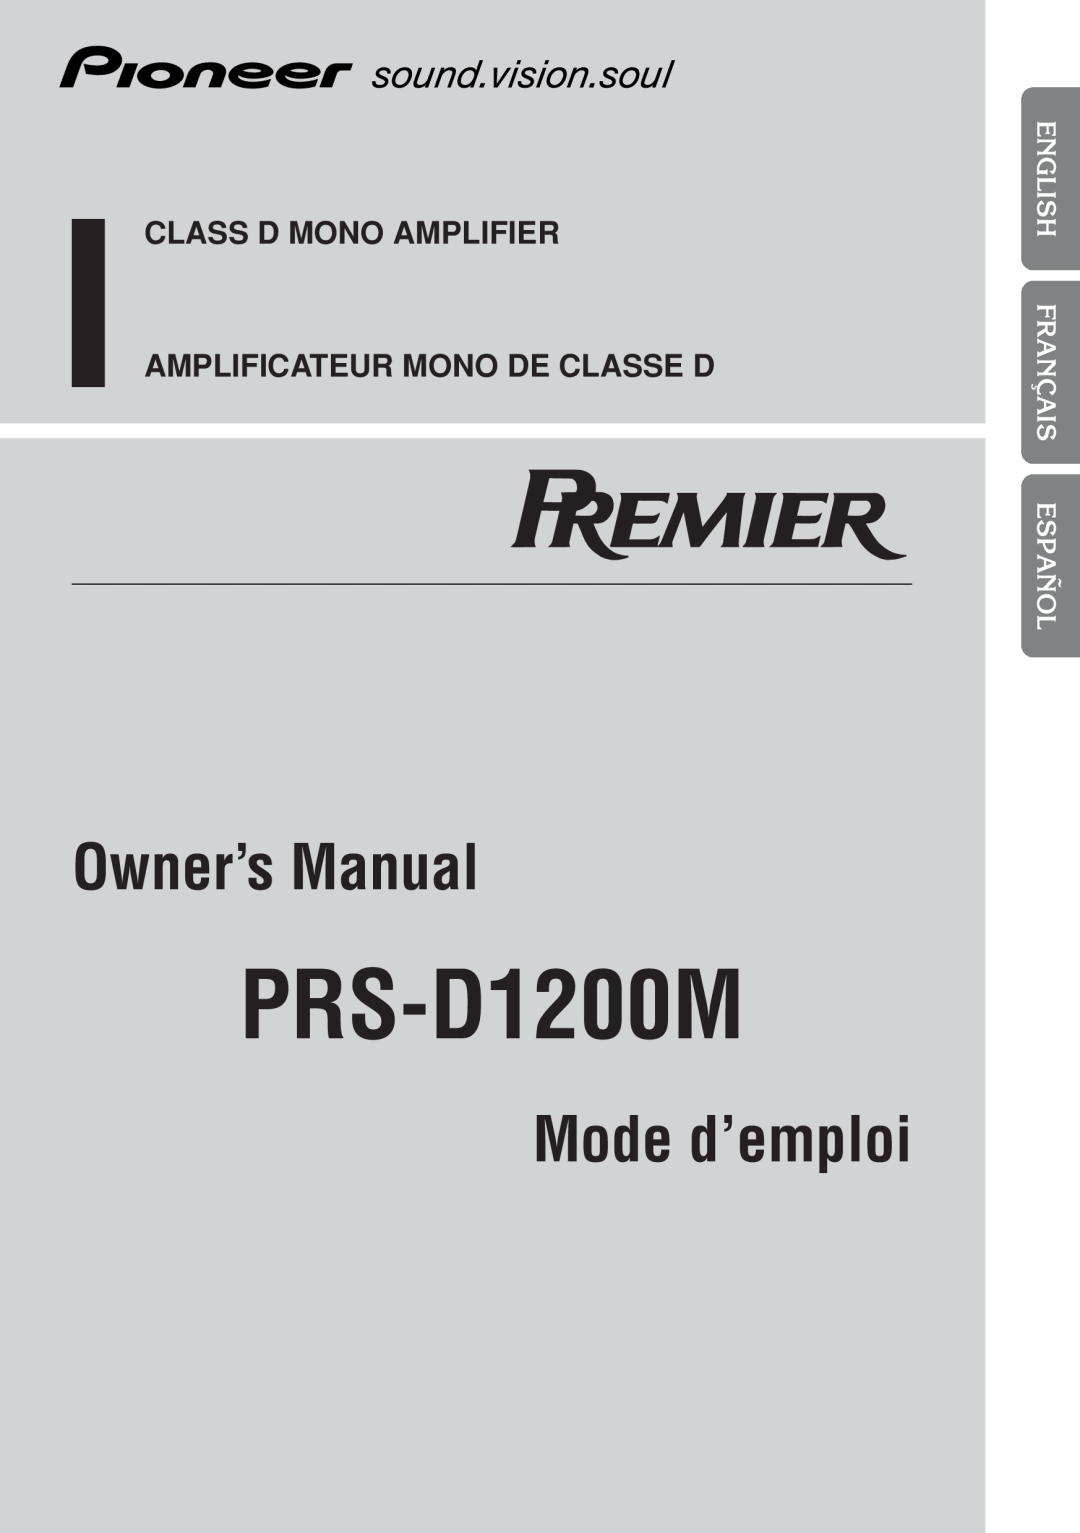 Pioneer PRS-D1200M owner manual English Français Español, êìëëäàâ, Mode d’emploi, Class D Mono Amplifier 